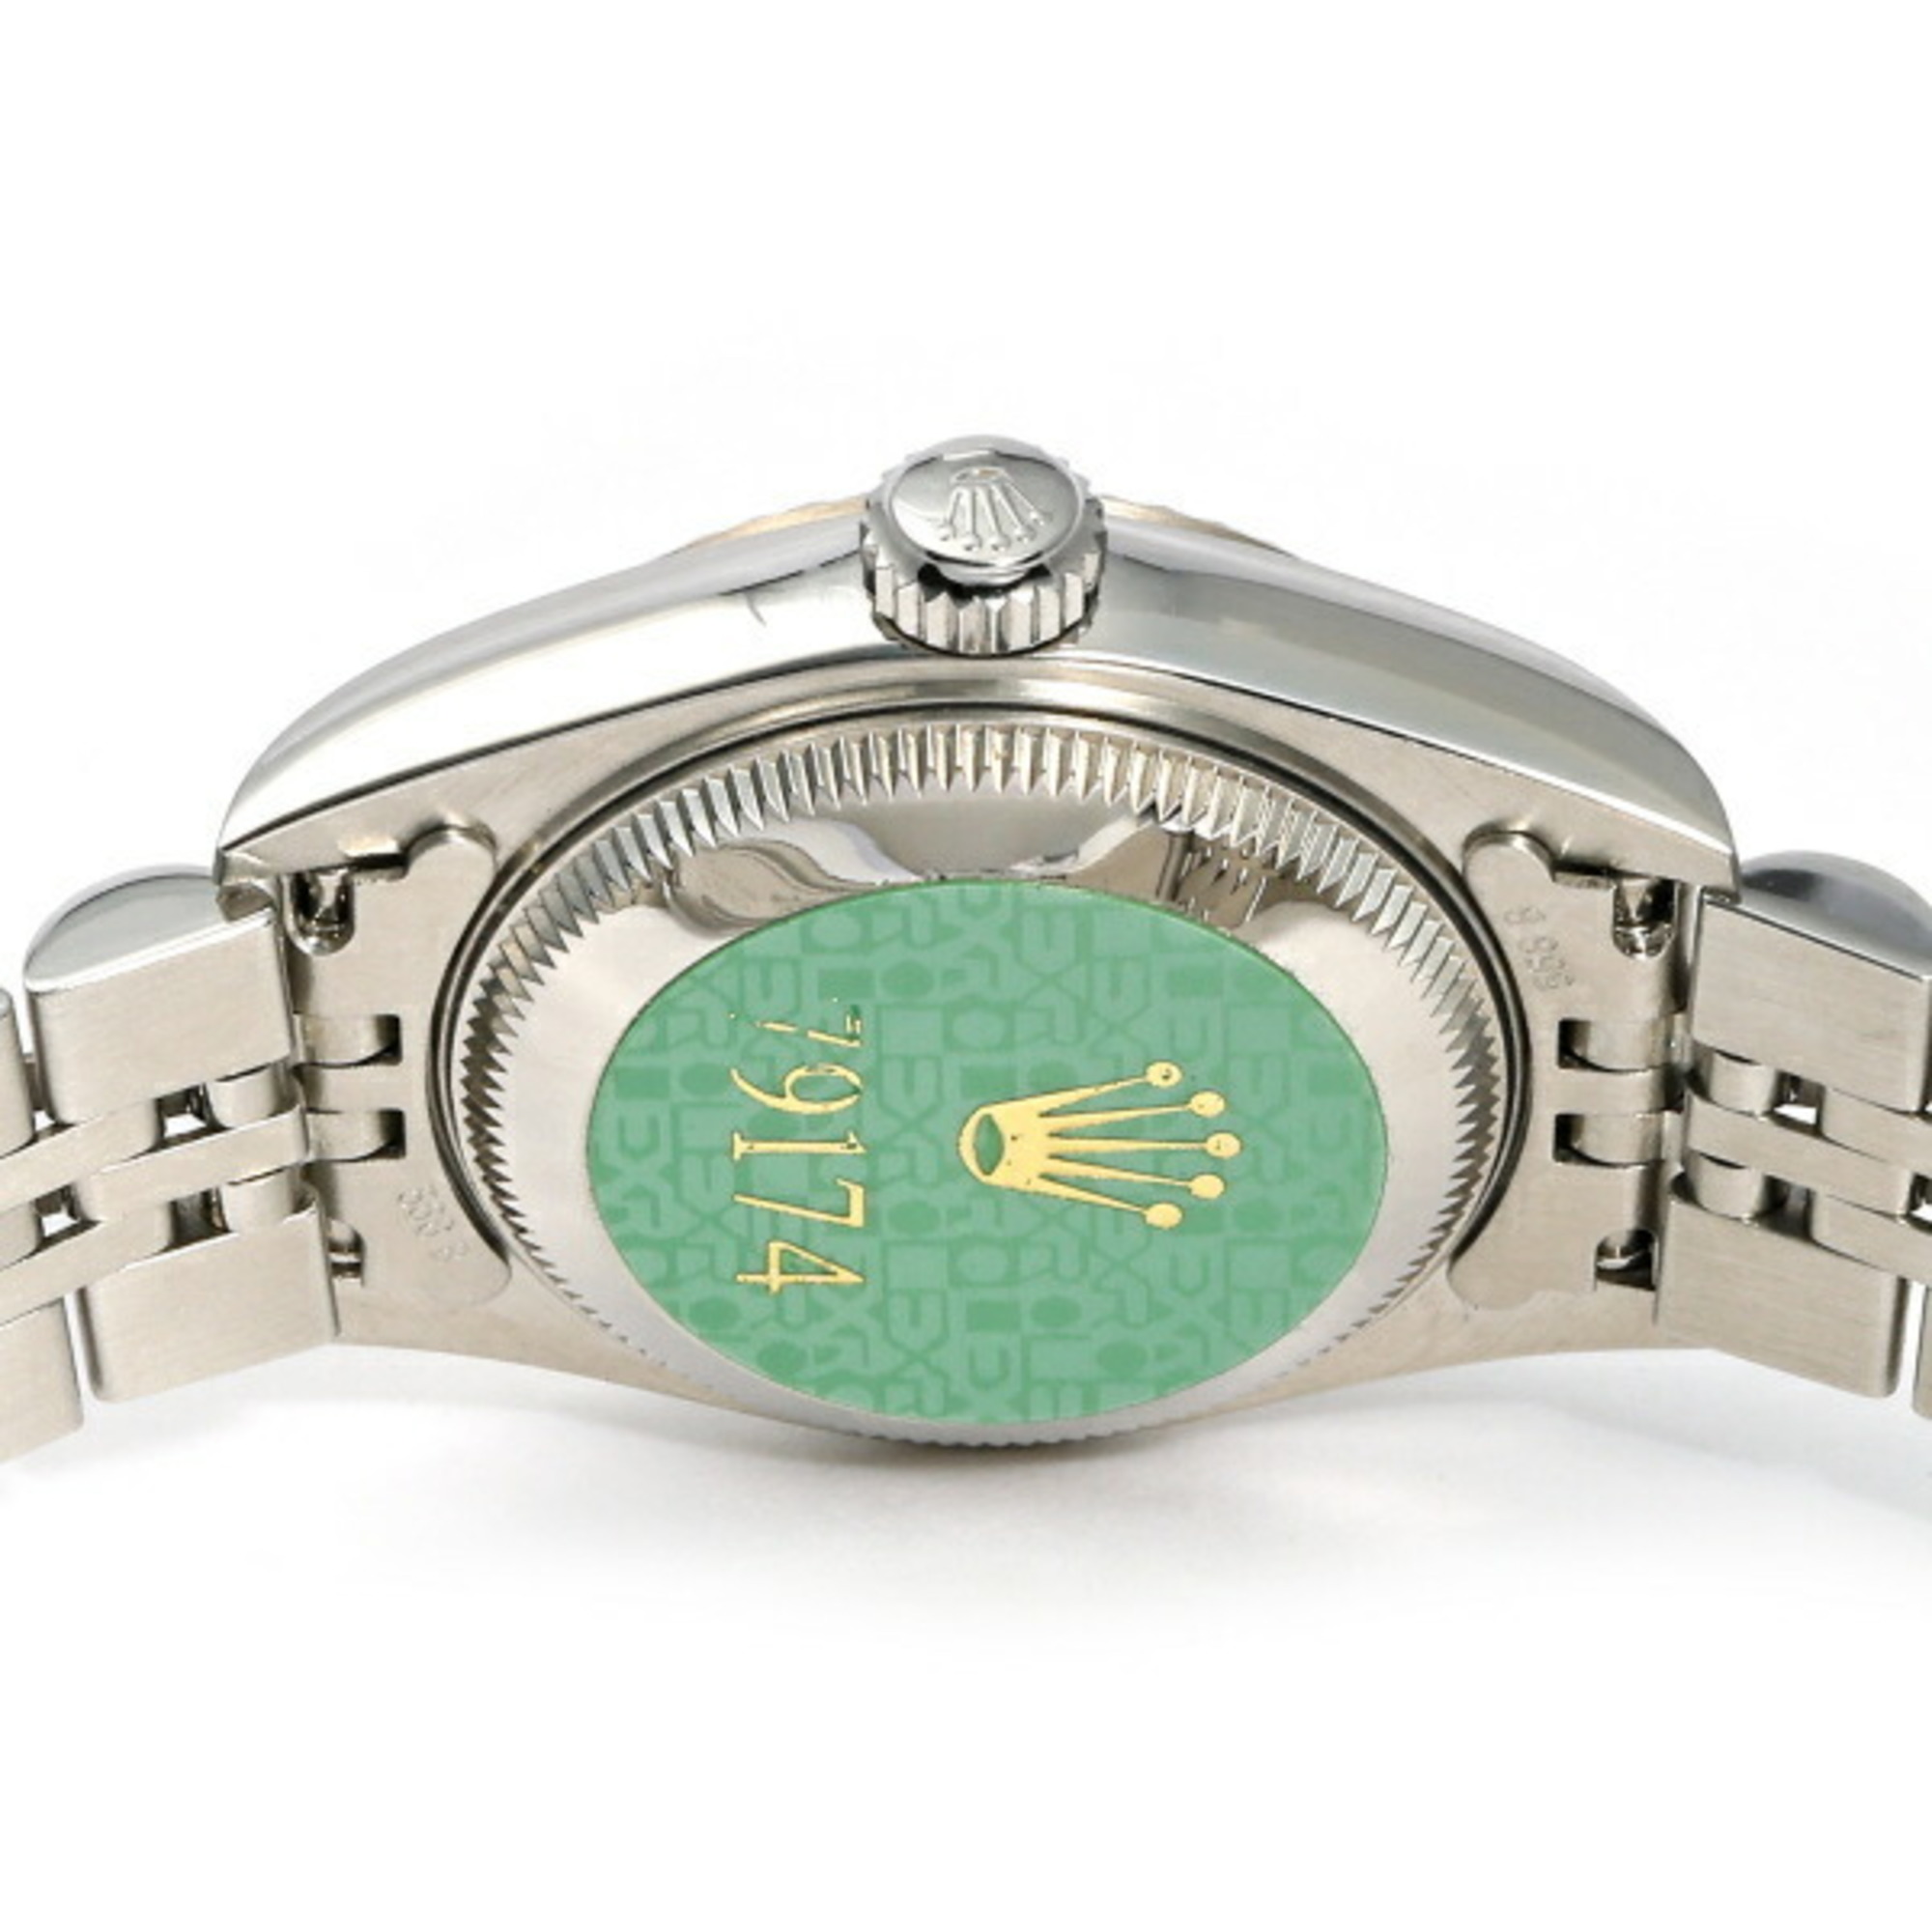 Rolex ROLEX Datejust 26 79174NG White Dial Wristwatch Ladies